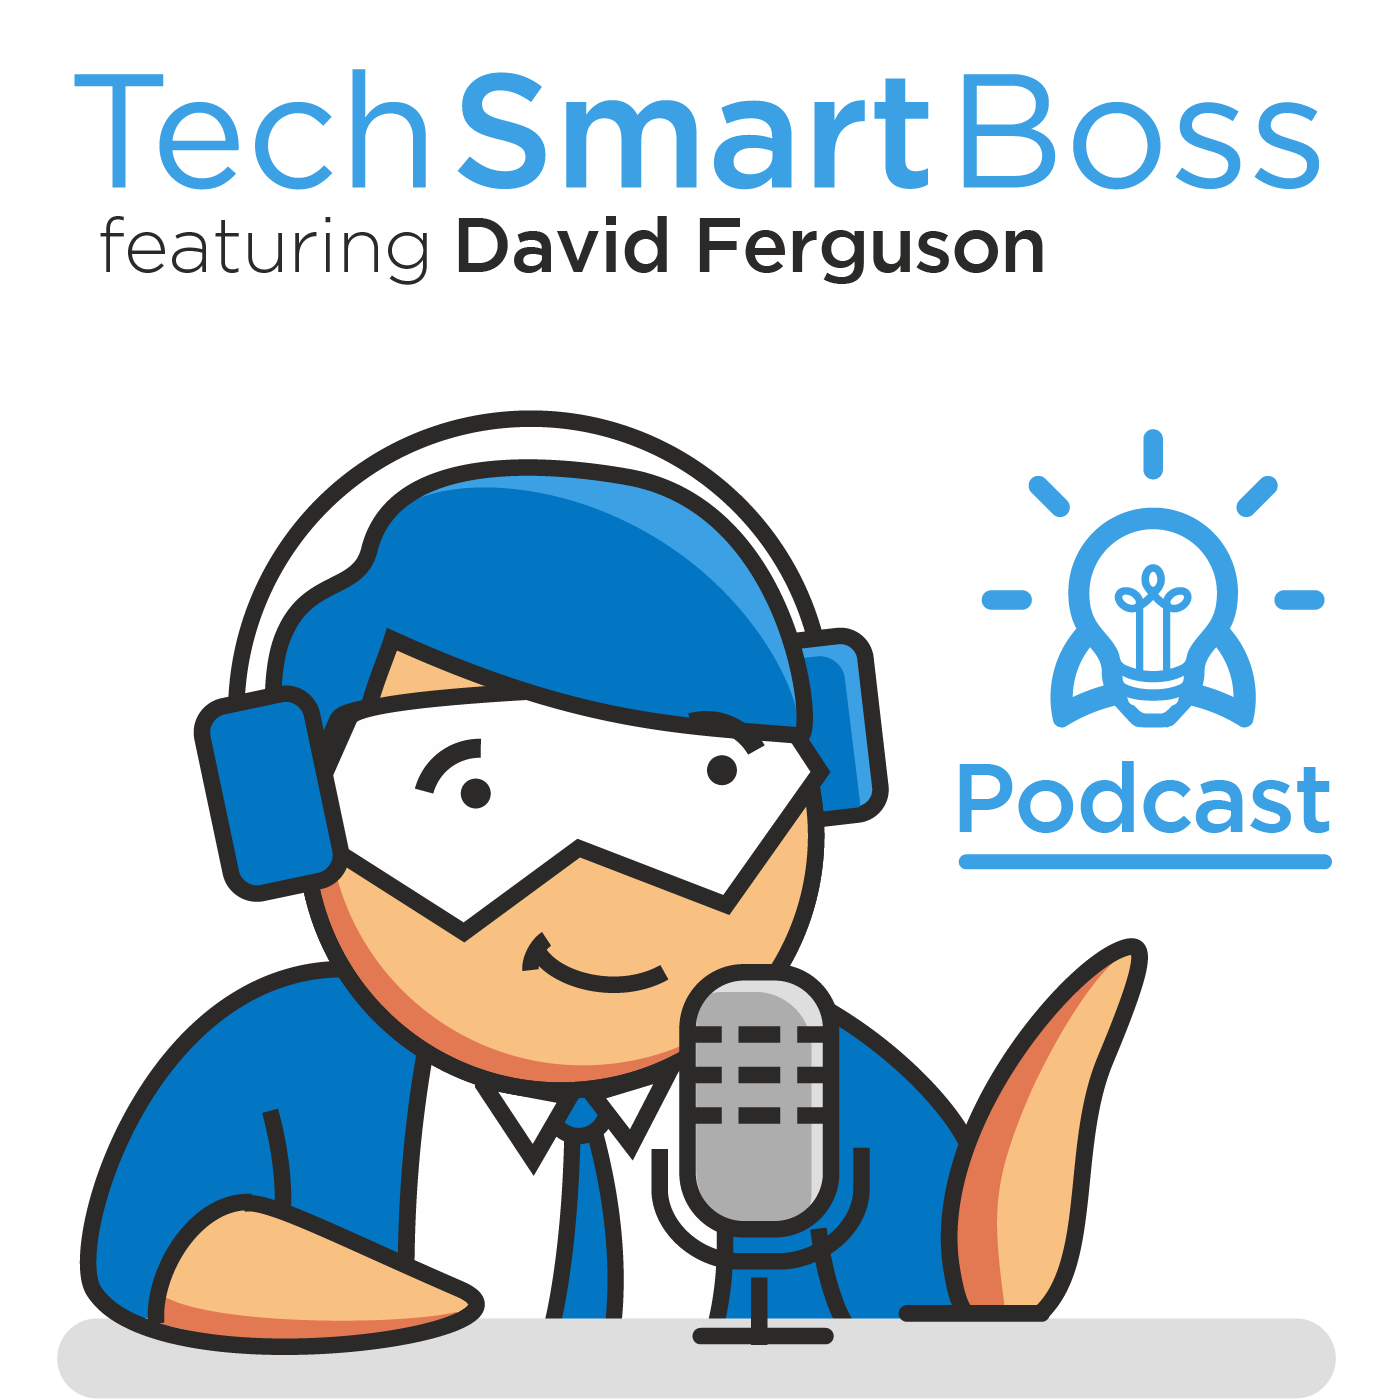 Episode 70: The Content Marketing Tech Stack for a Tech Smart Boss